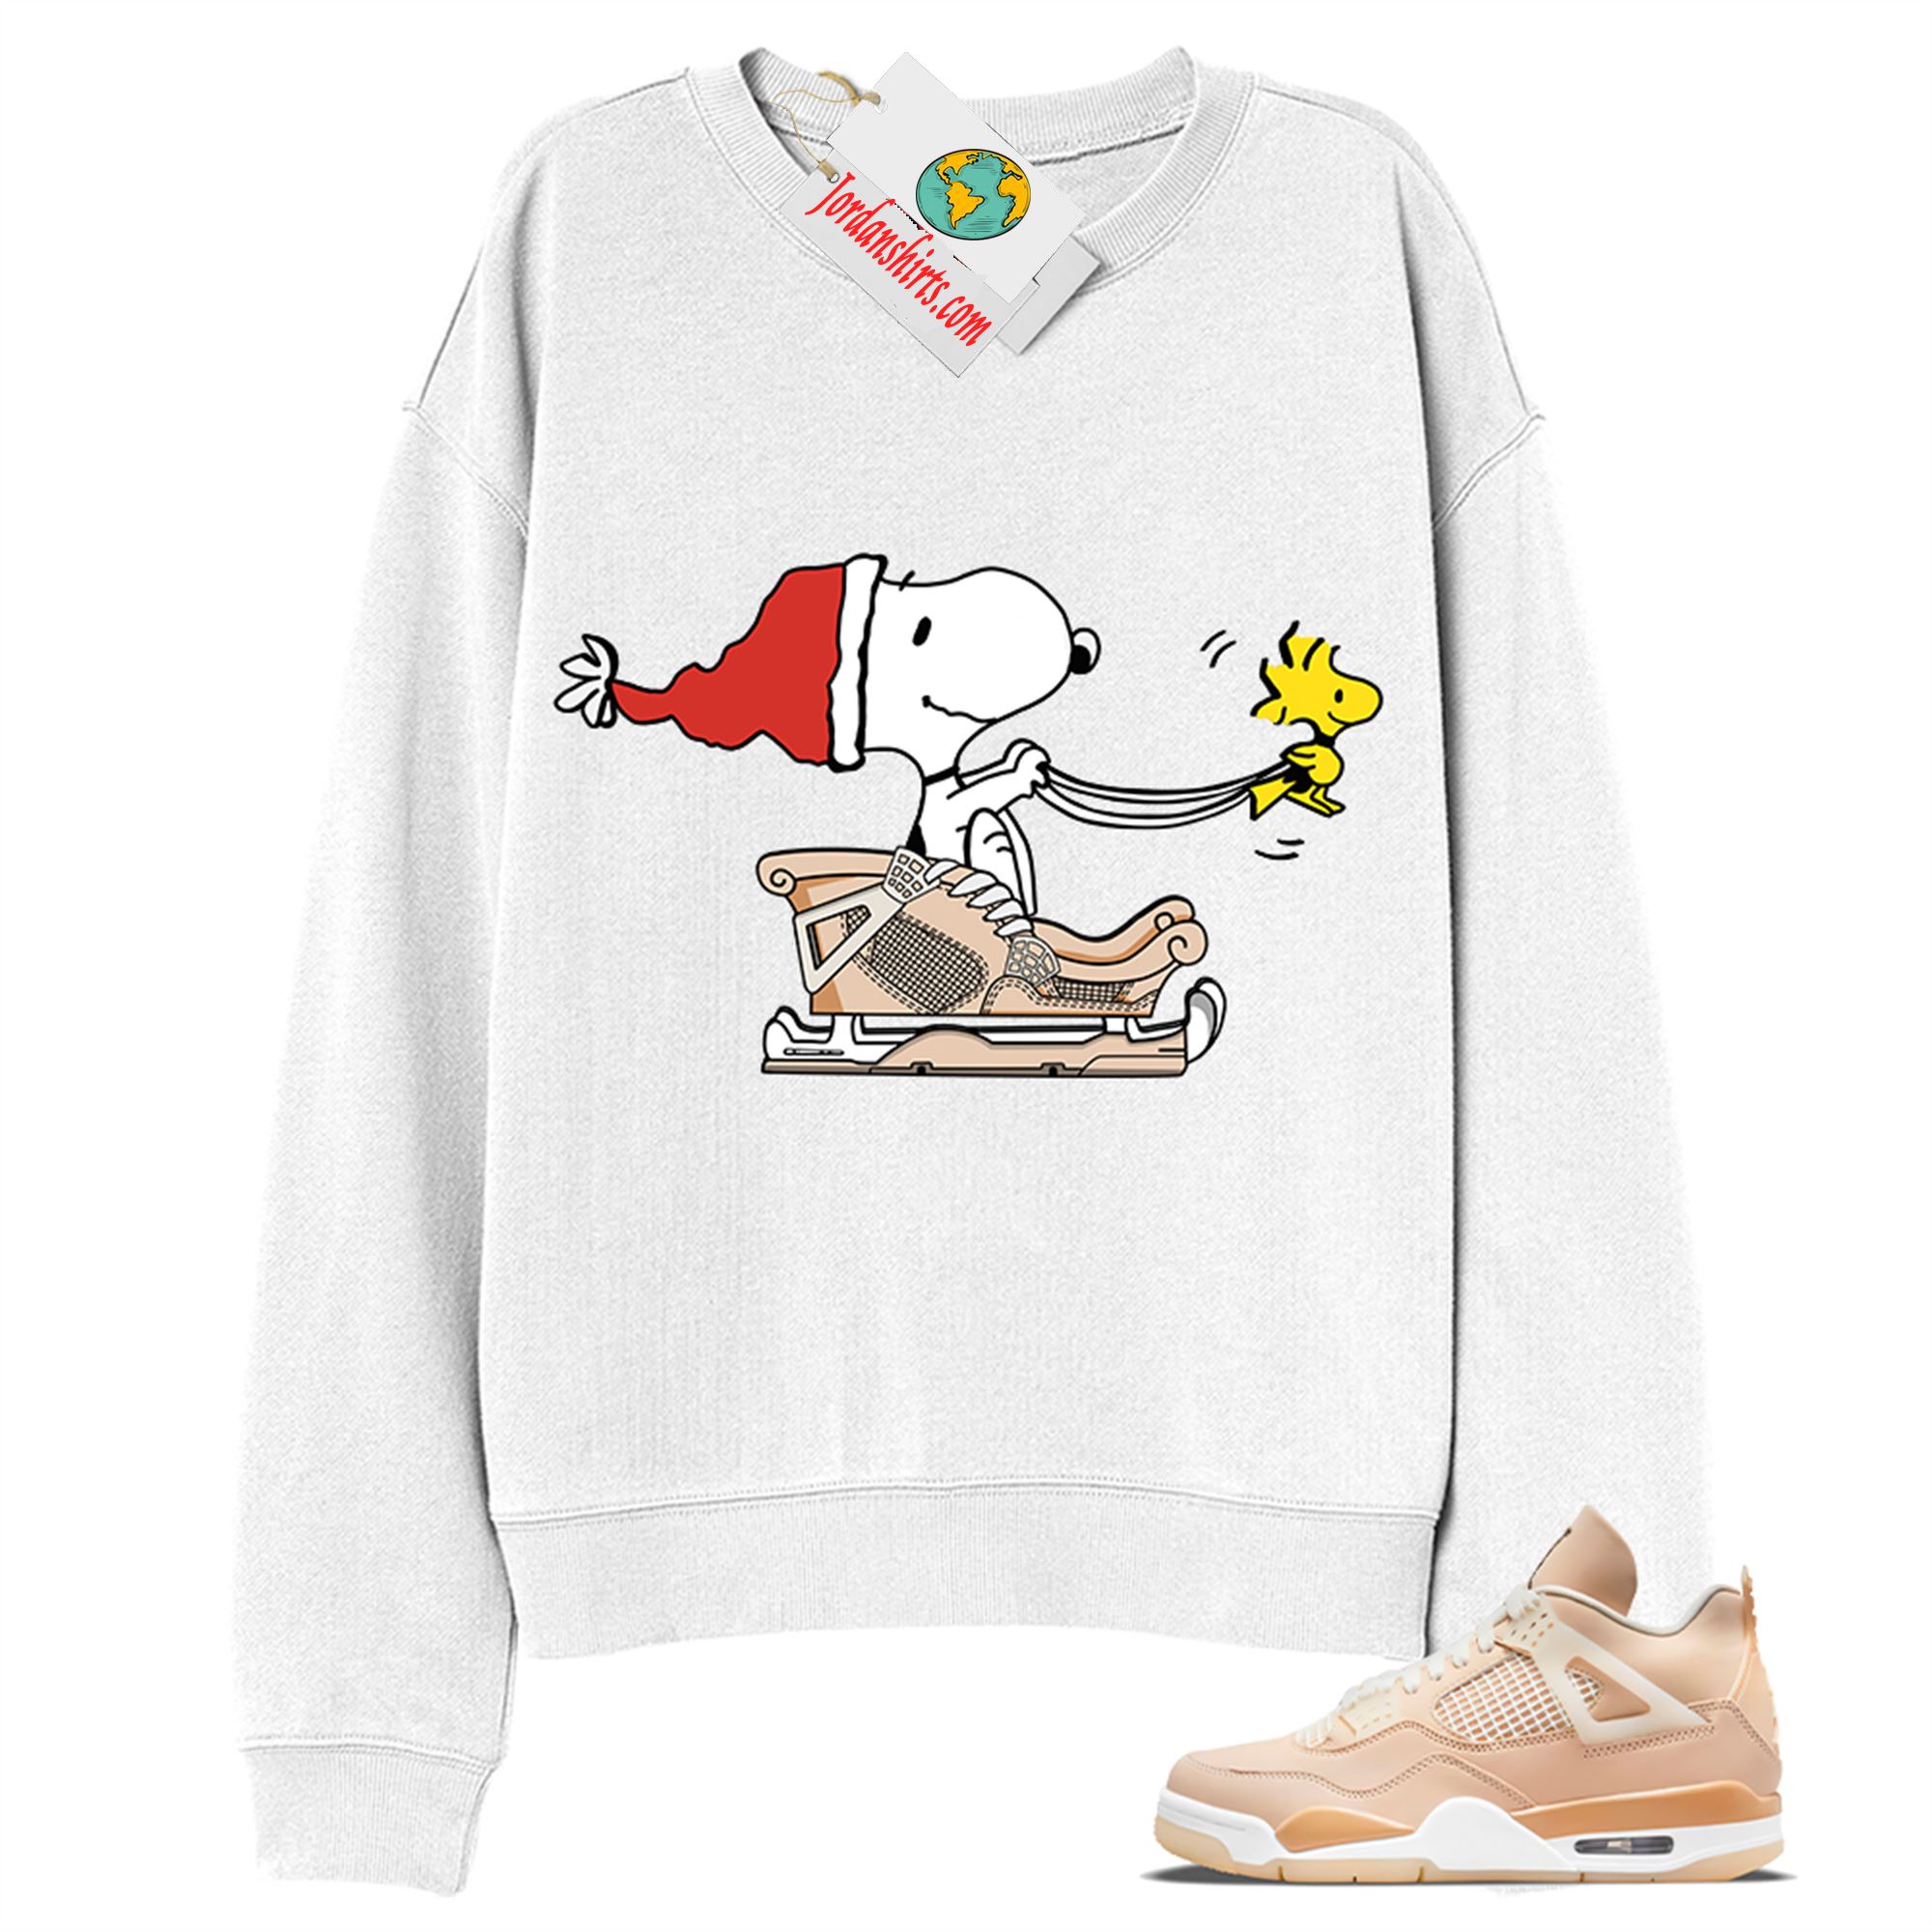 Jordan 4 Sweatshirt, Snoopy Dog Christmas White Sweatshirt Air Jordan 4 Shimmer 4s Full Size Up To 5xl